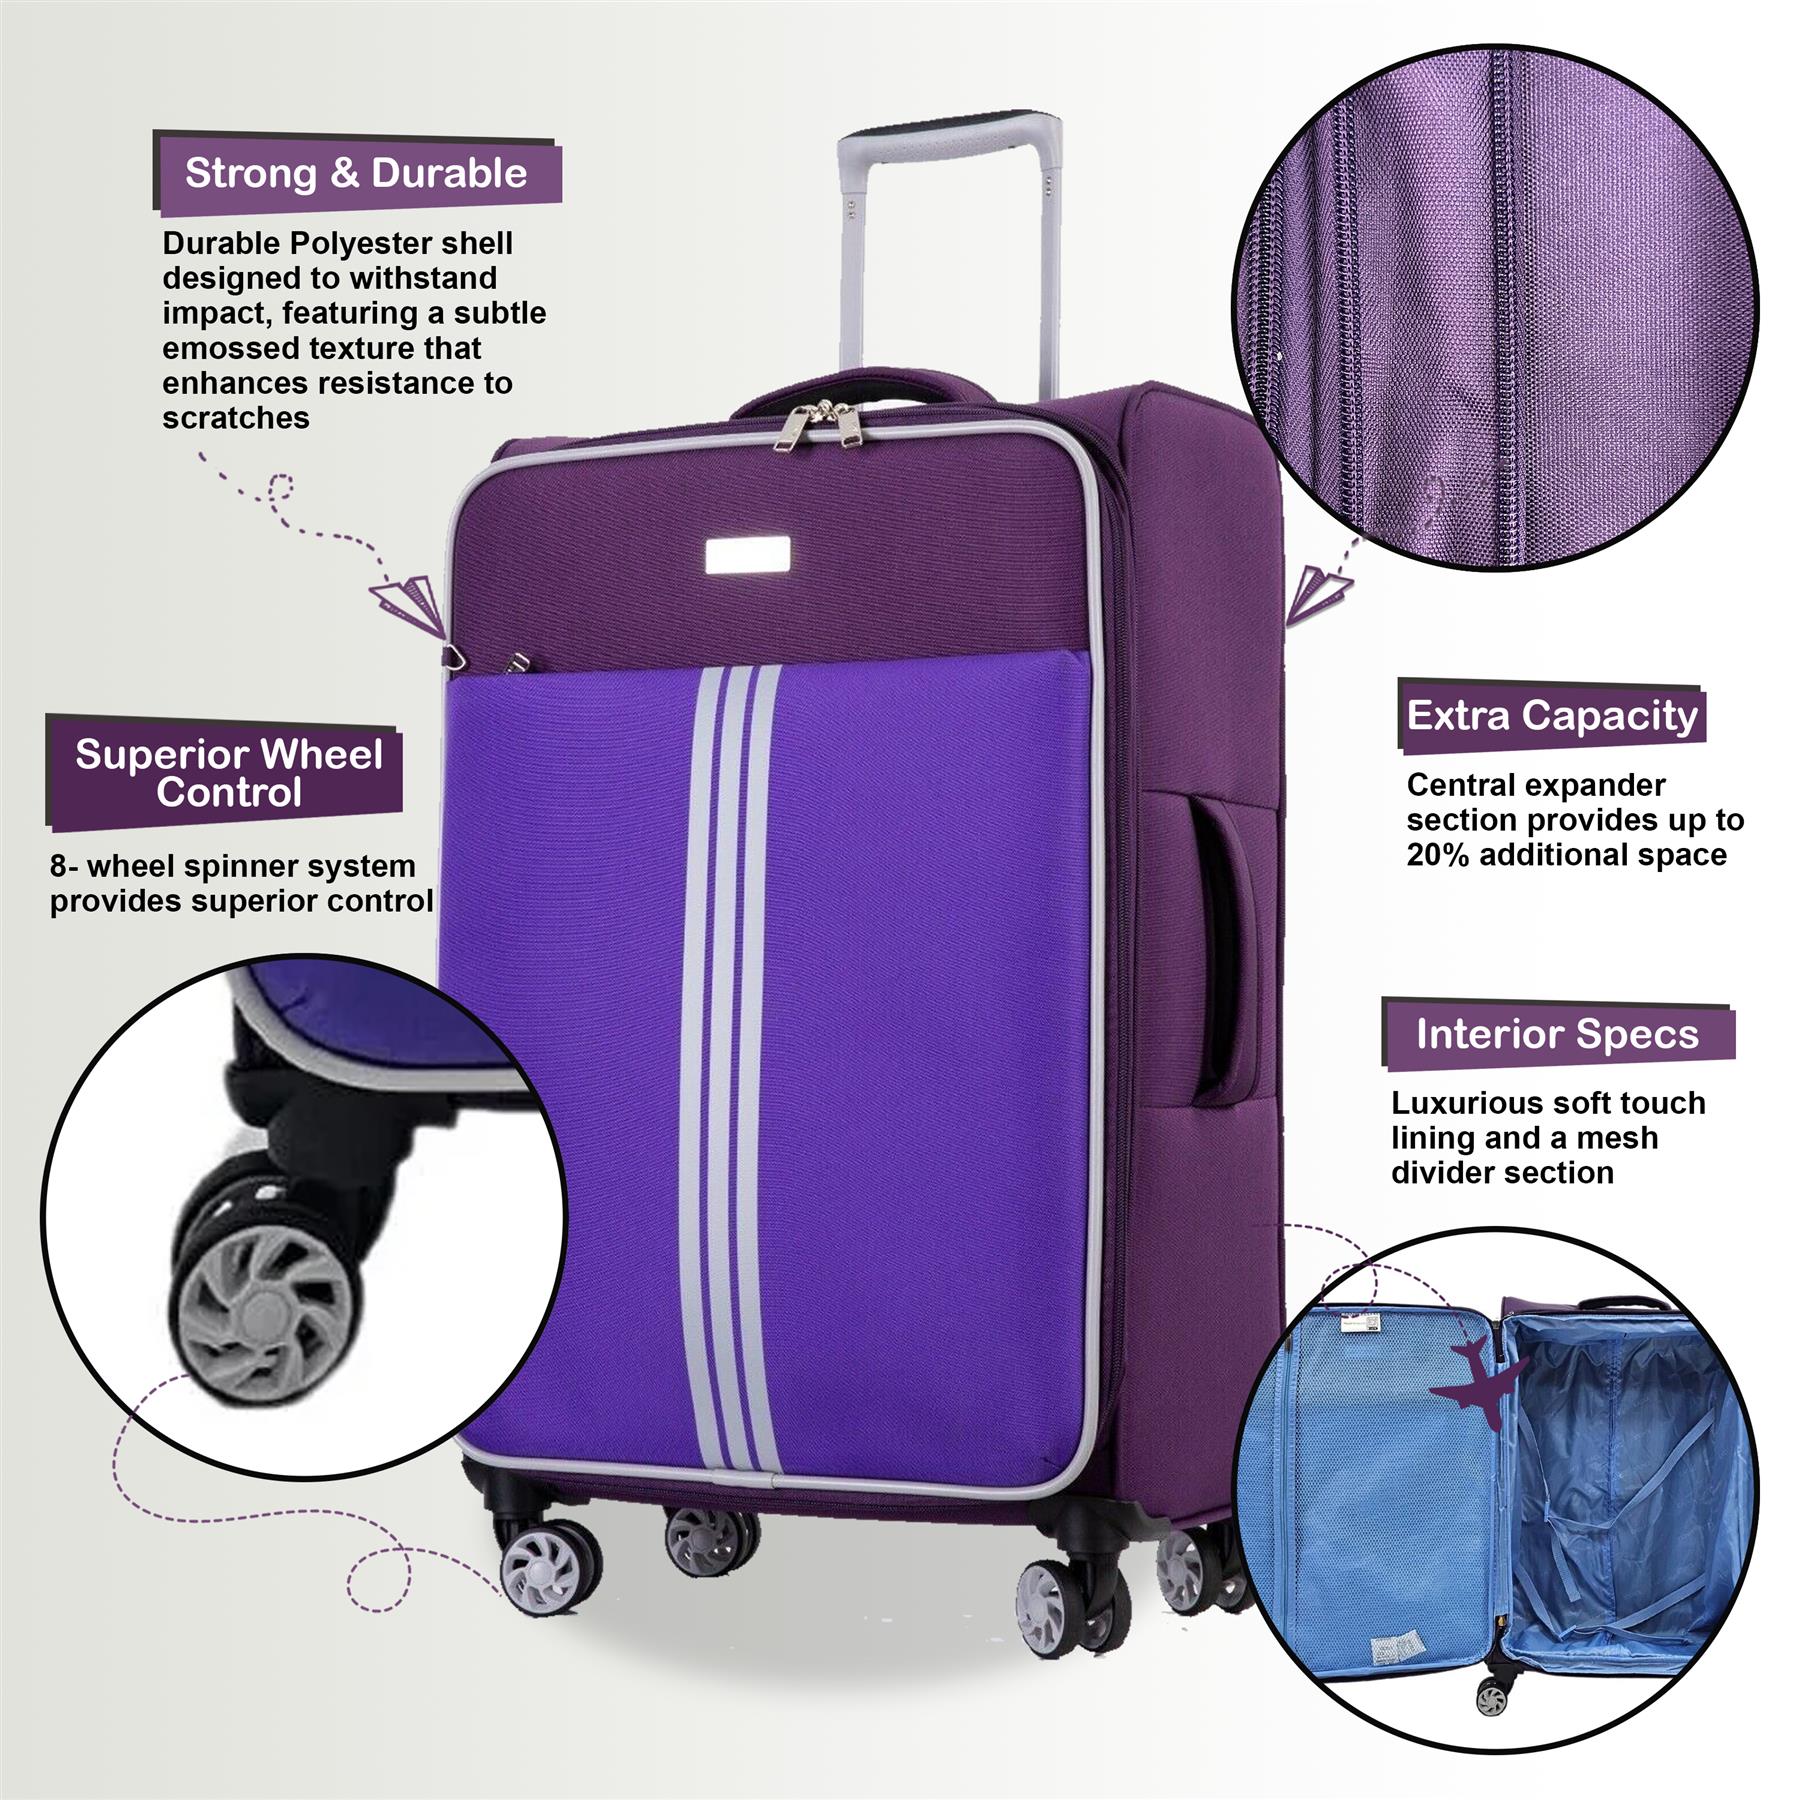 Beaverton Large Soft Shell Suitcase in Purple